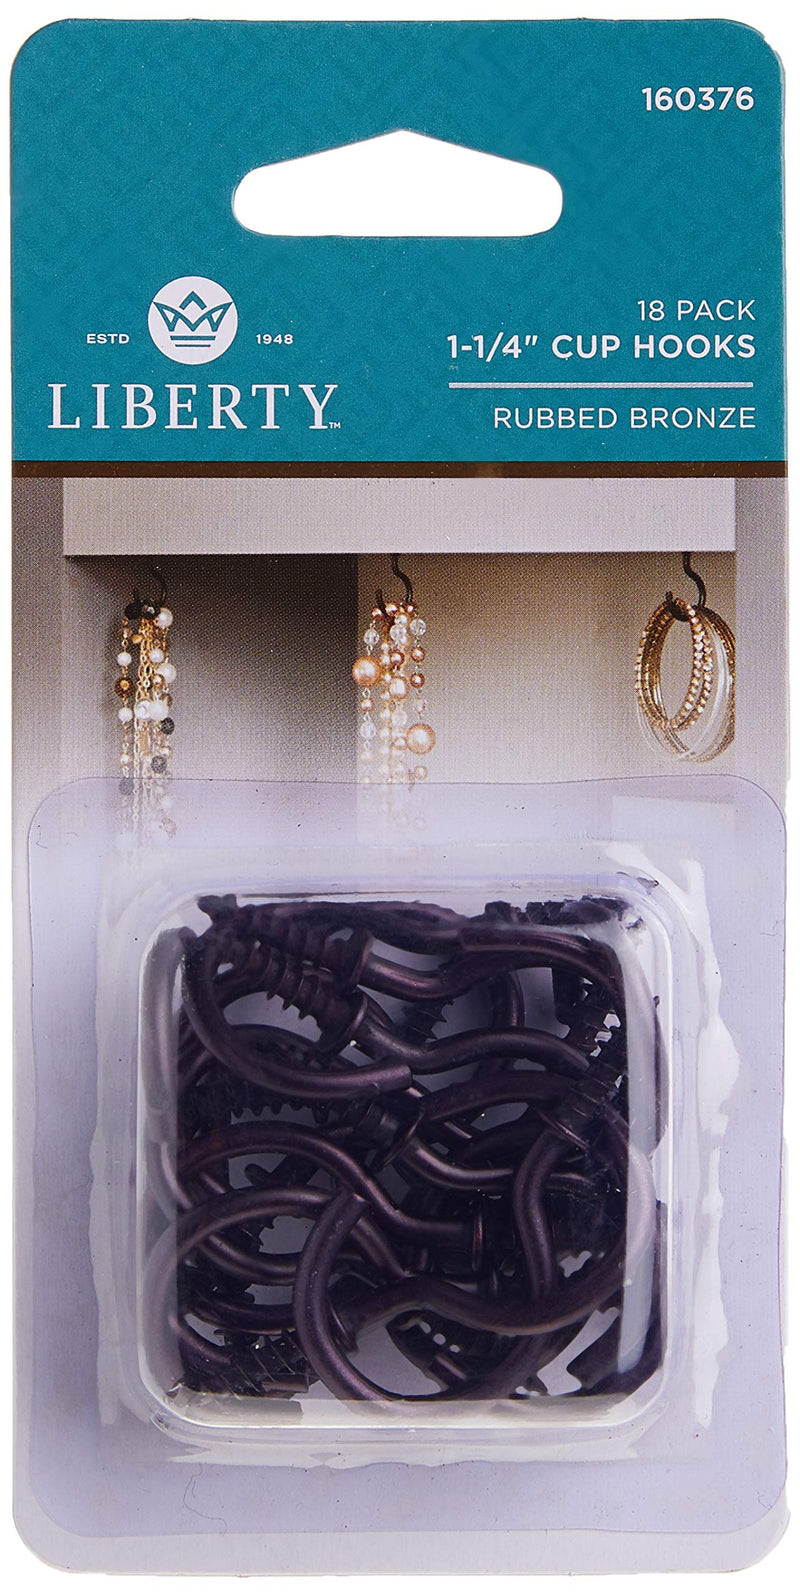 Liberty 160376 1-1/4" Cup Hooks (Pack of 18), Rubbed Bronze - LeoForward Australia